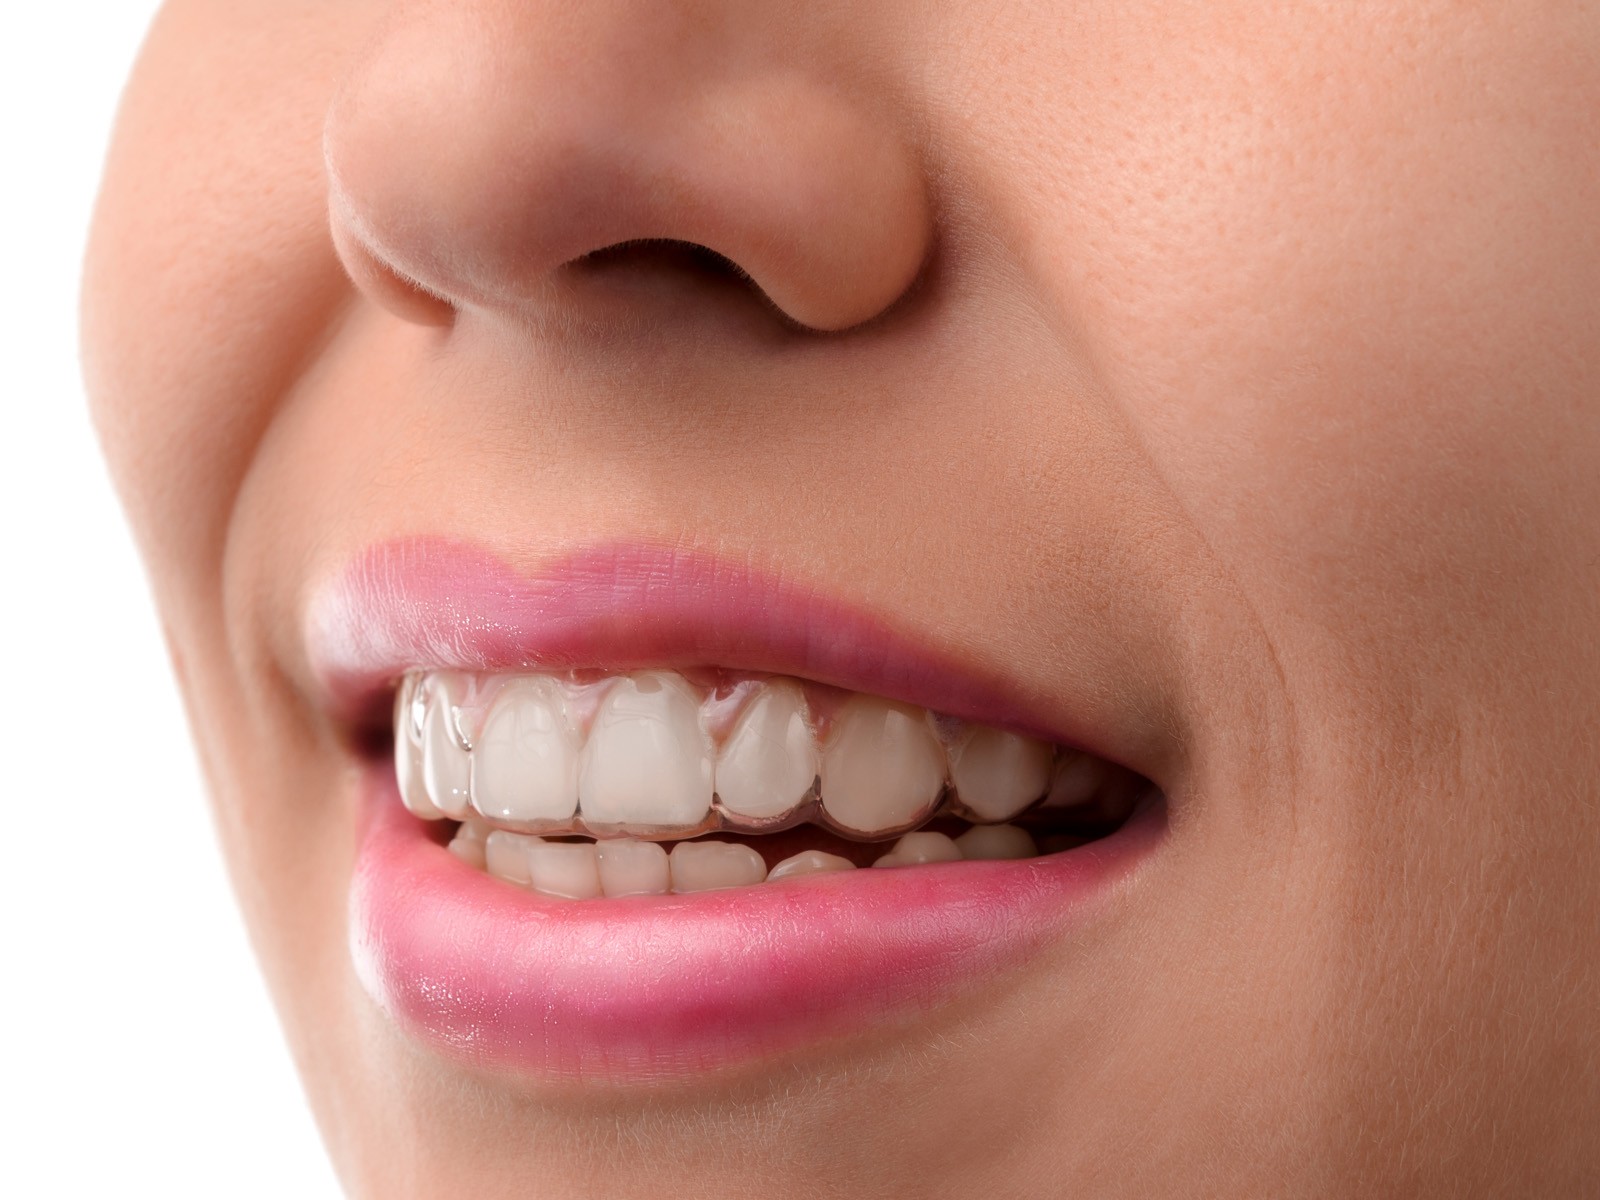 Does Invisalign whiten teeth?